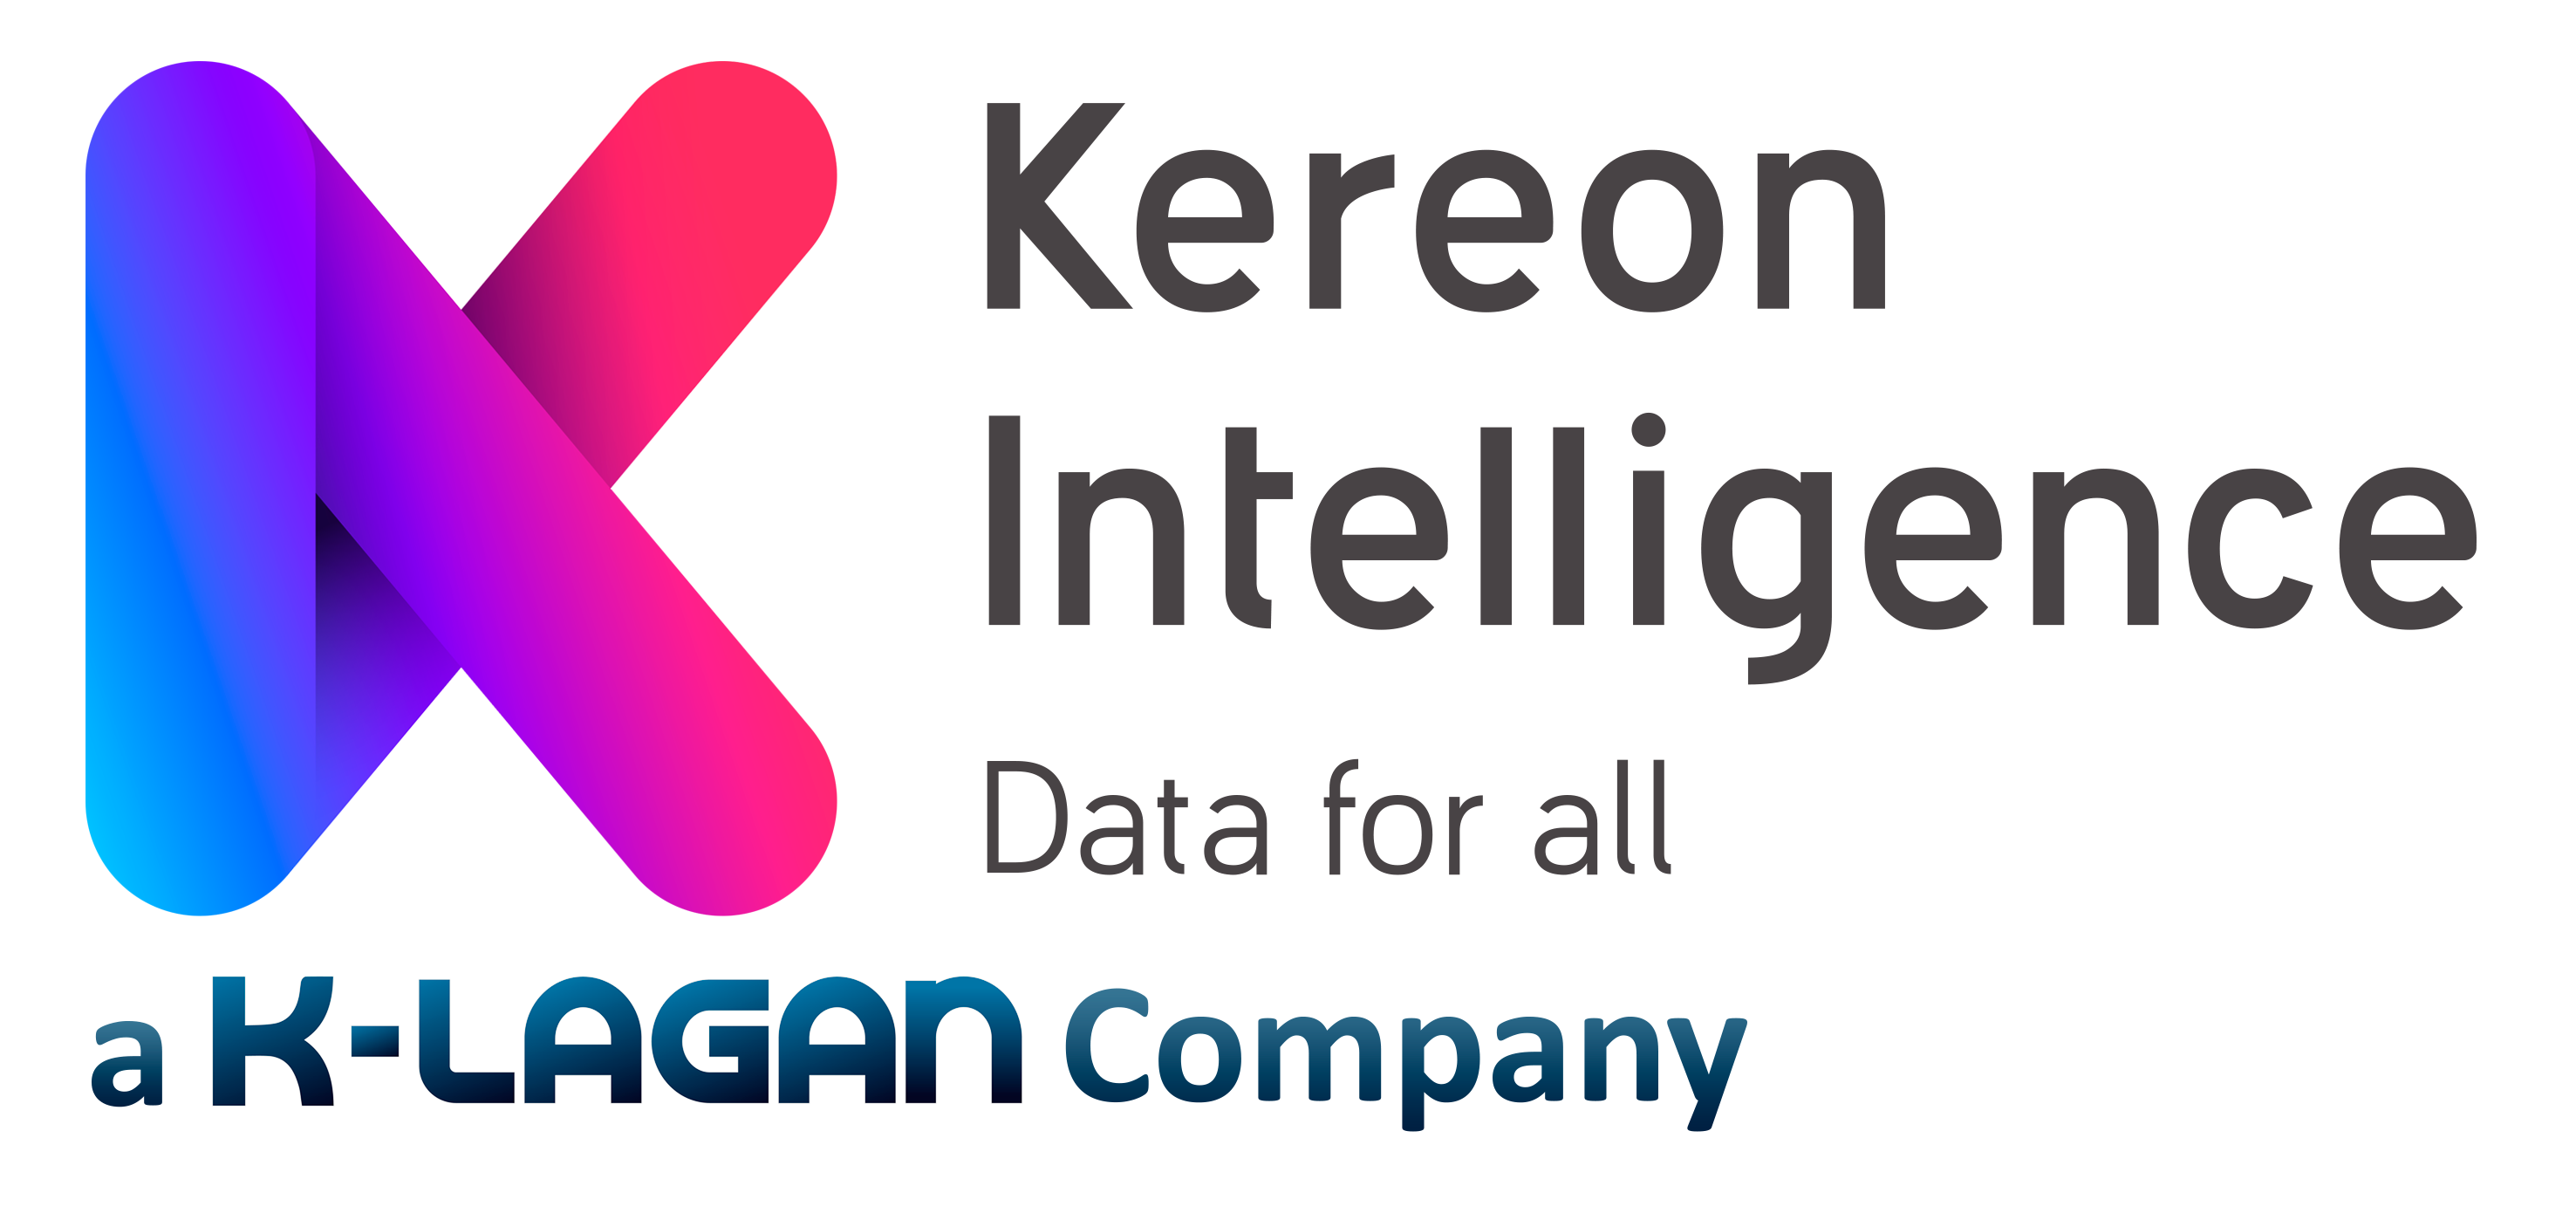 Kereon Intelligence